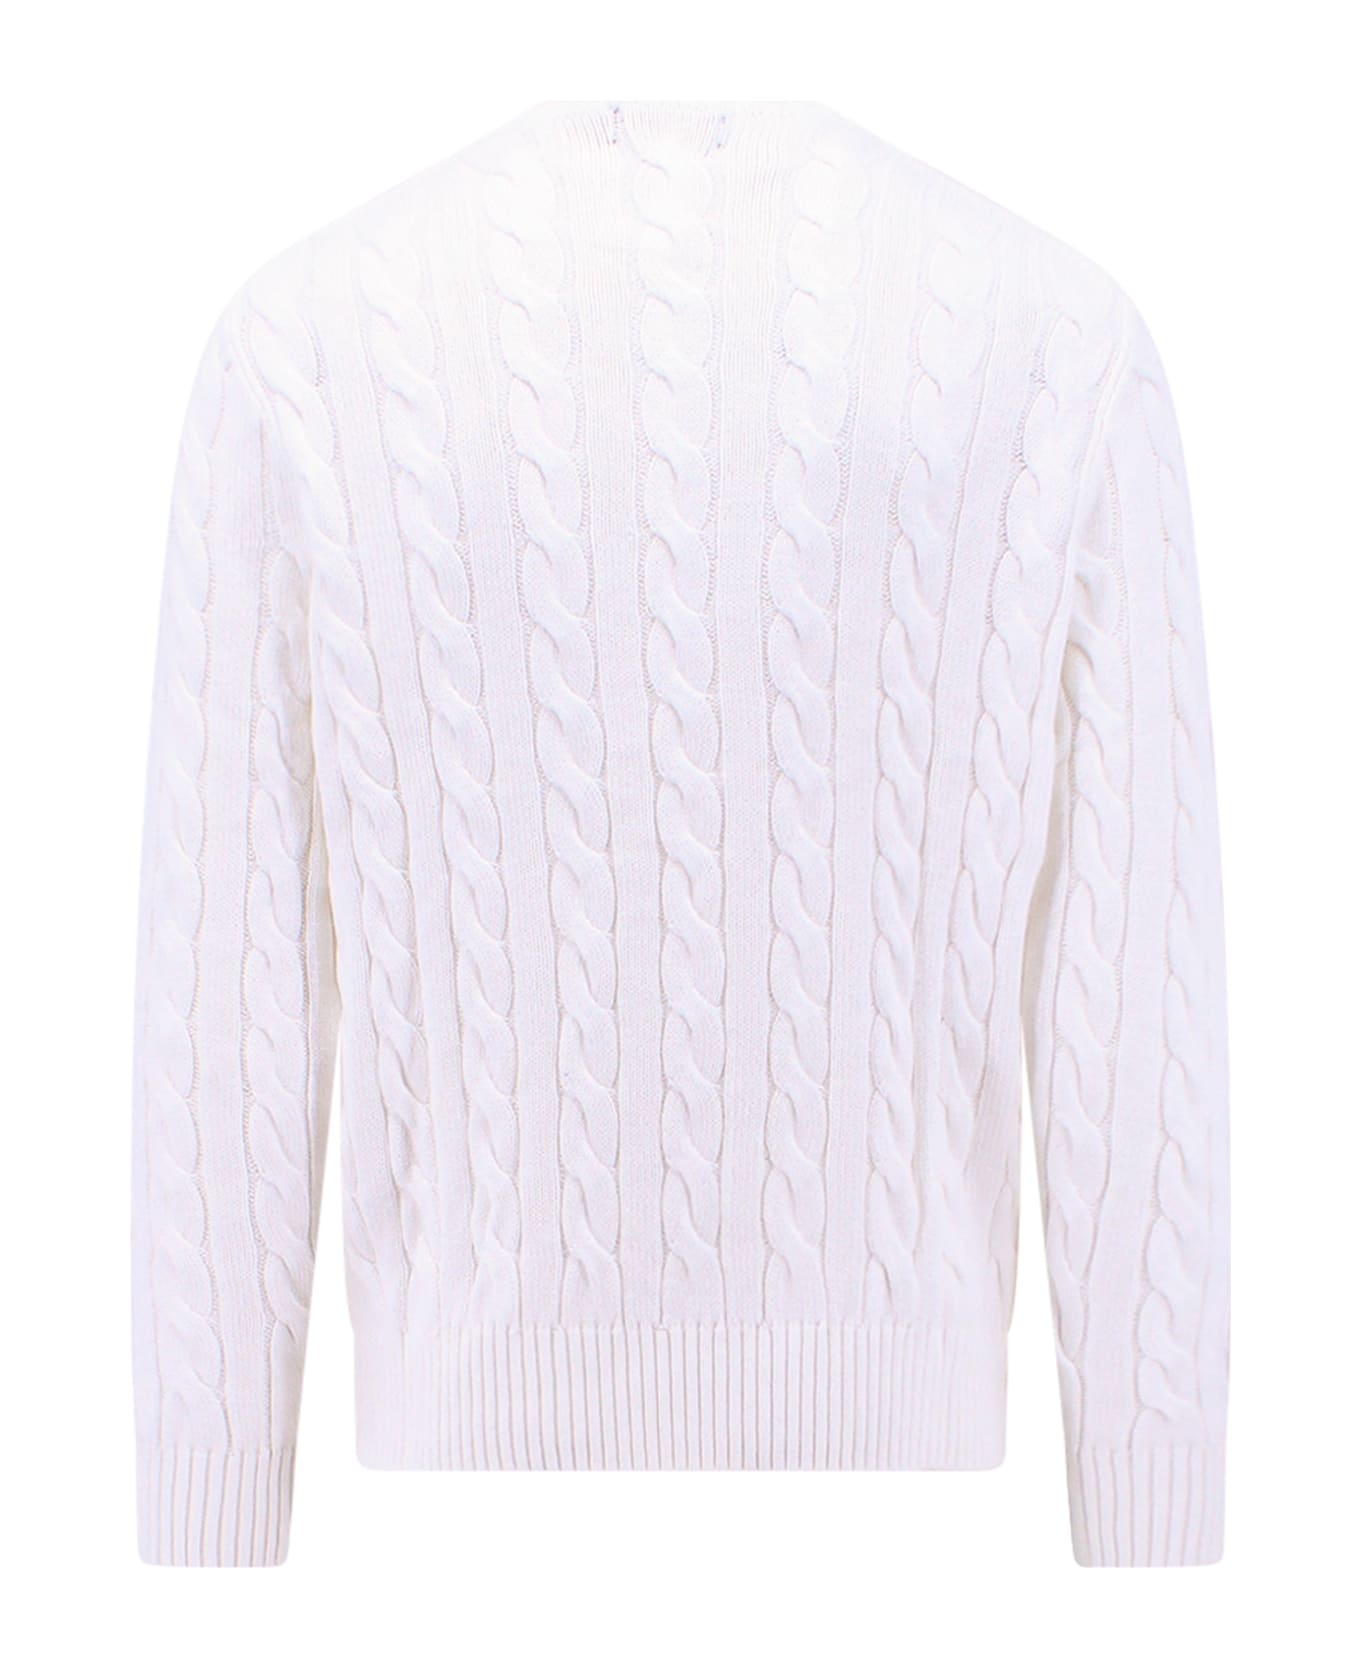 Polo Ralph Lauren Sweater - White